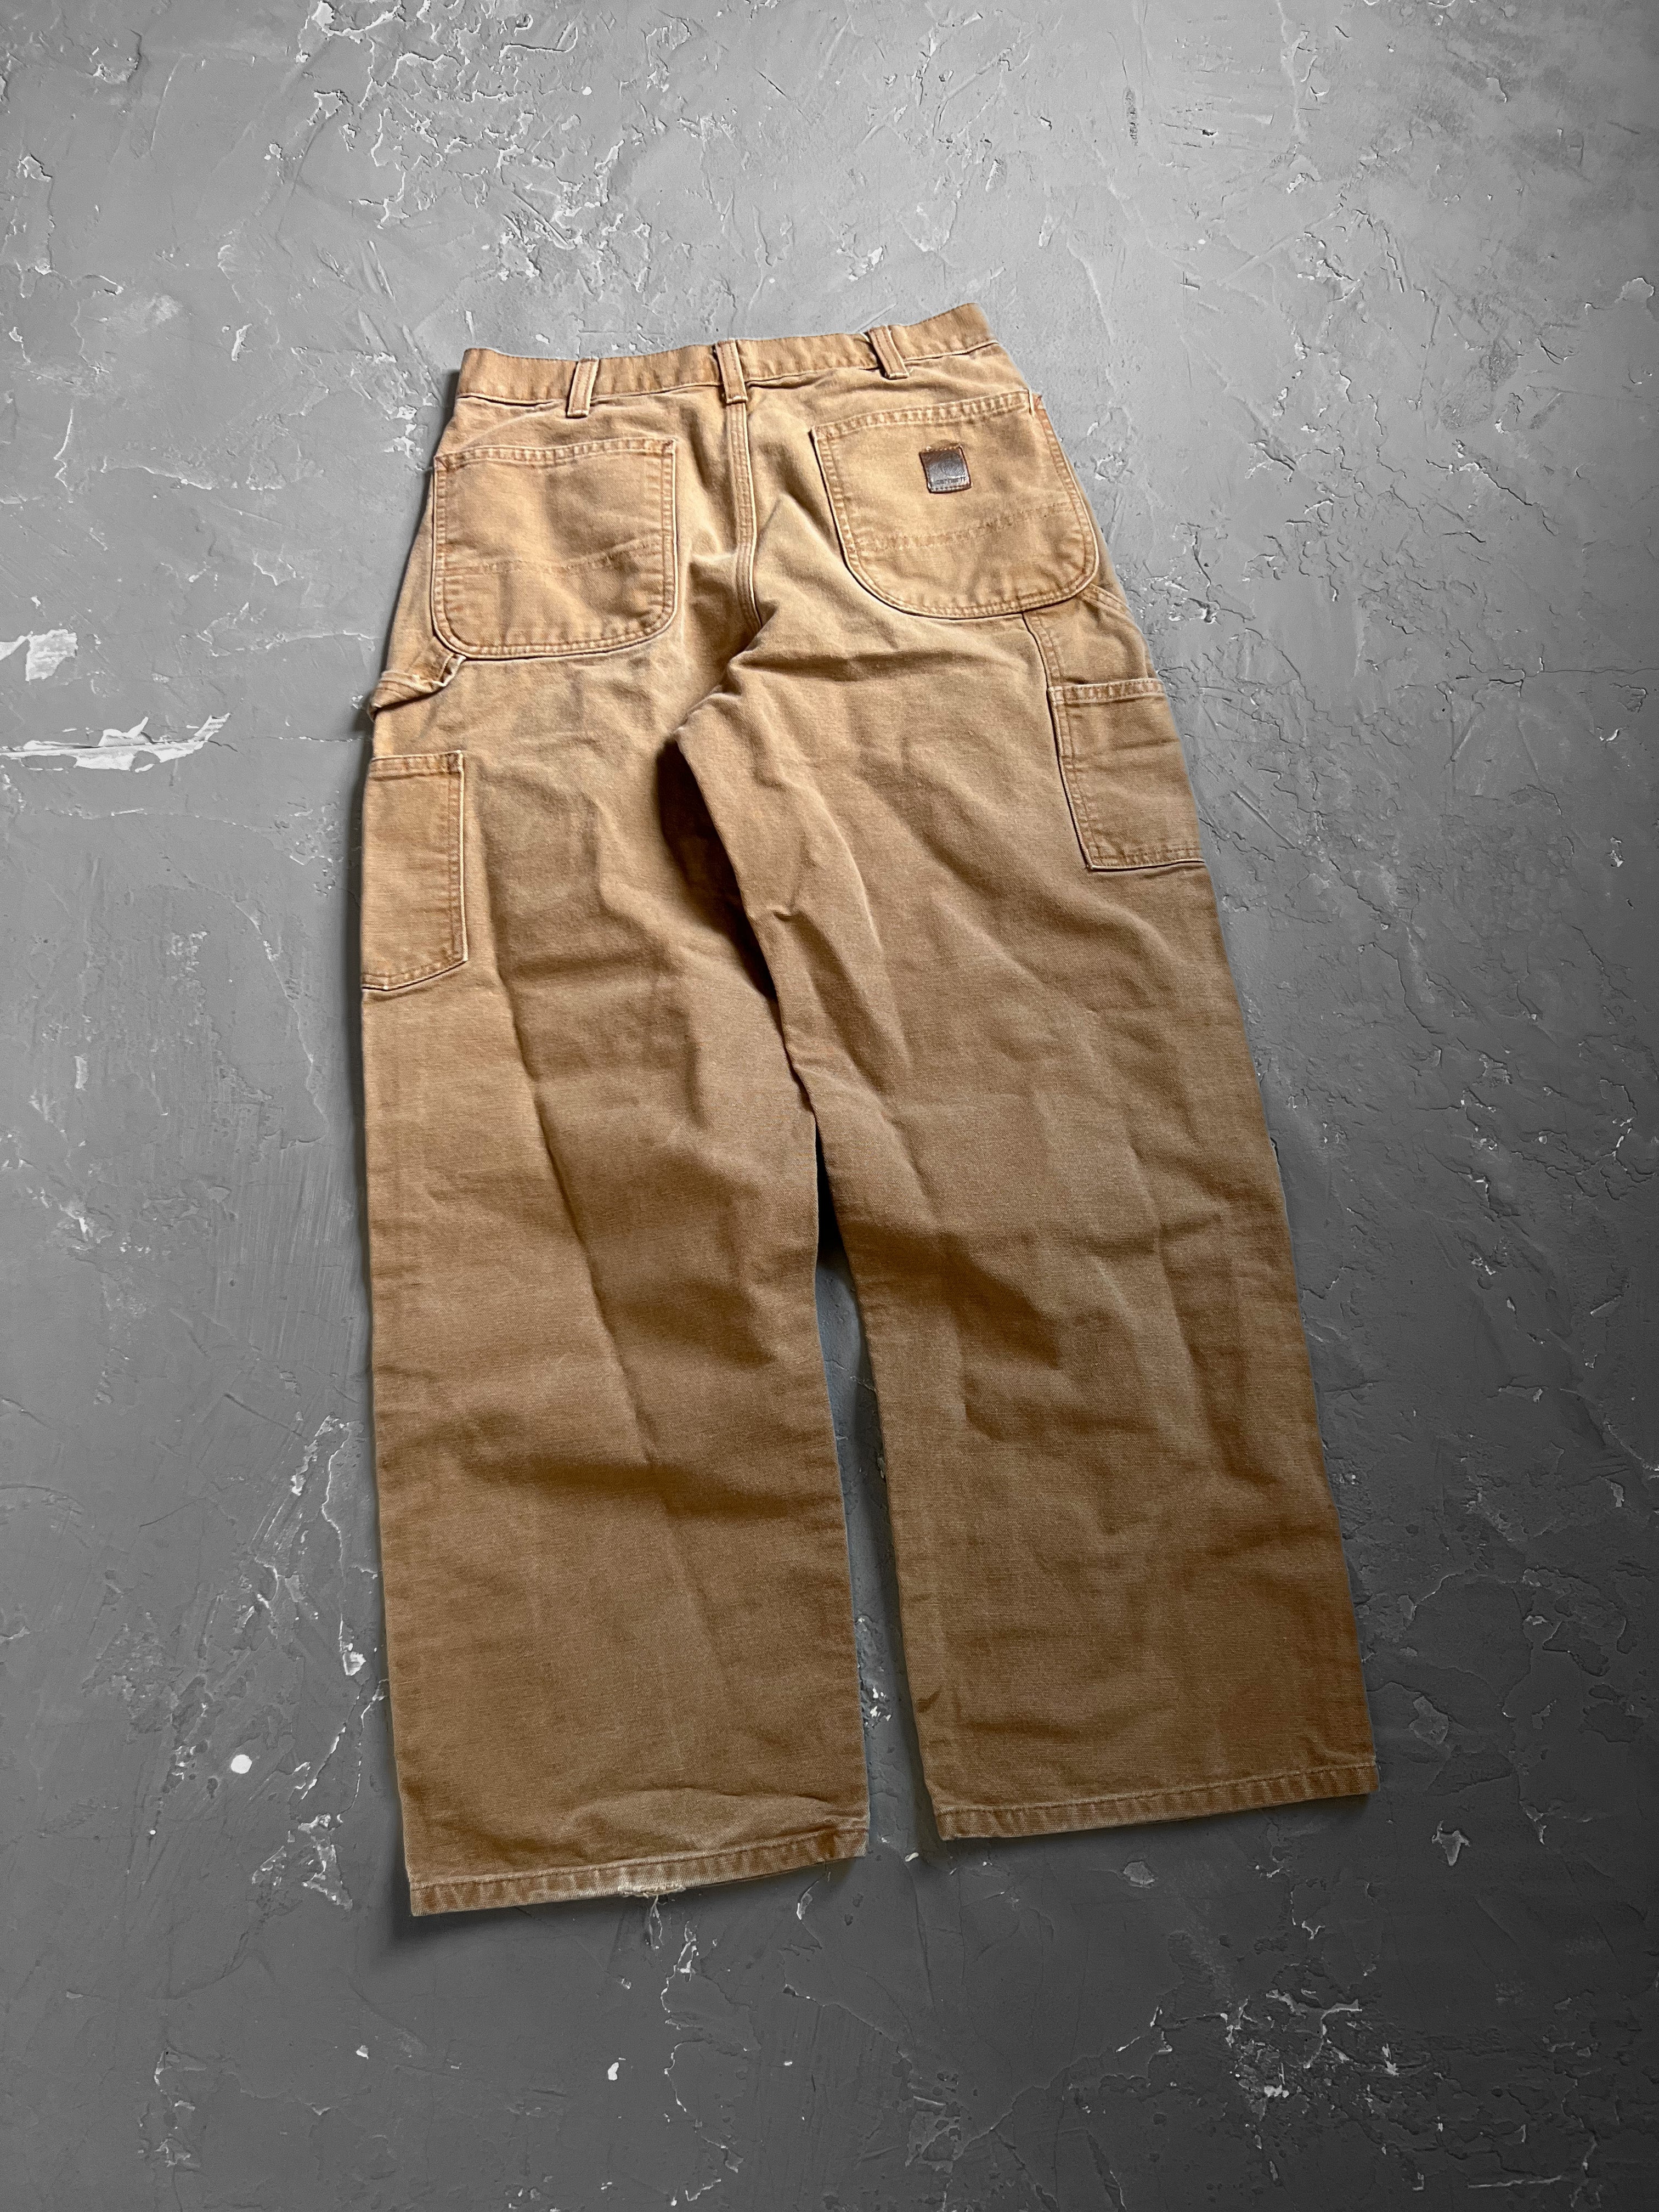 Carhartt Tan Carpenter Pants [29 x 30] – From The Past